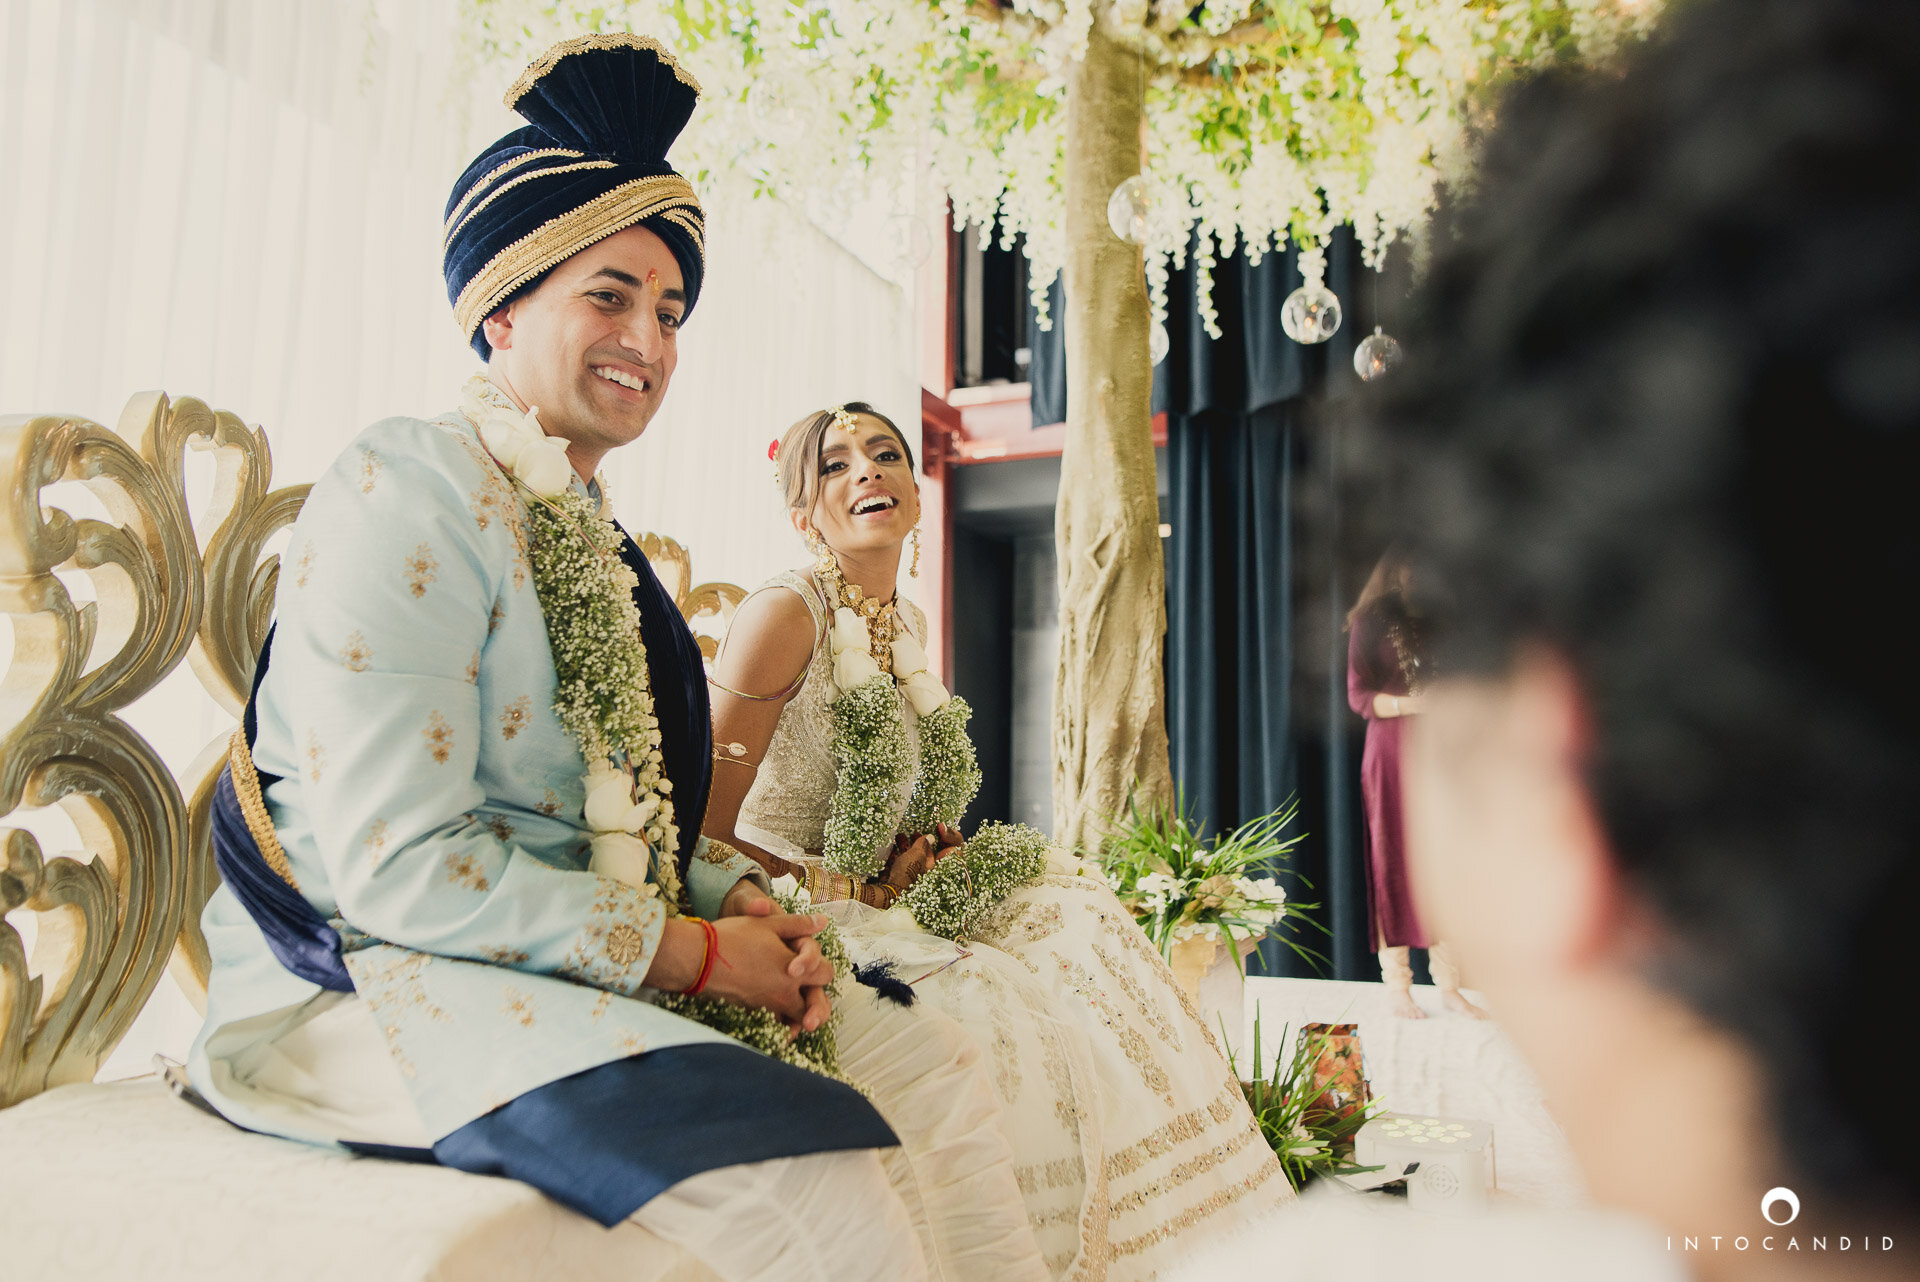 Chicago_Indian_Wedding_Photographer_Intocandid_Photography_Ketan & Manasvi_39.JPG